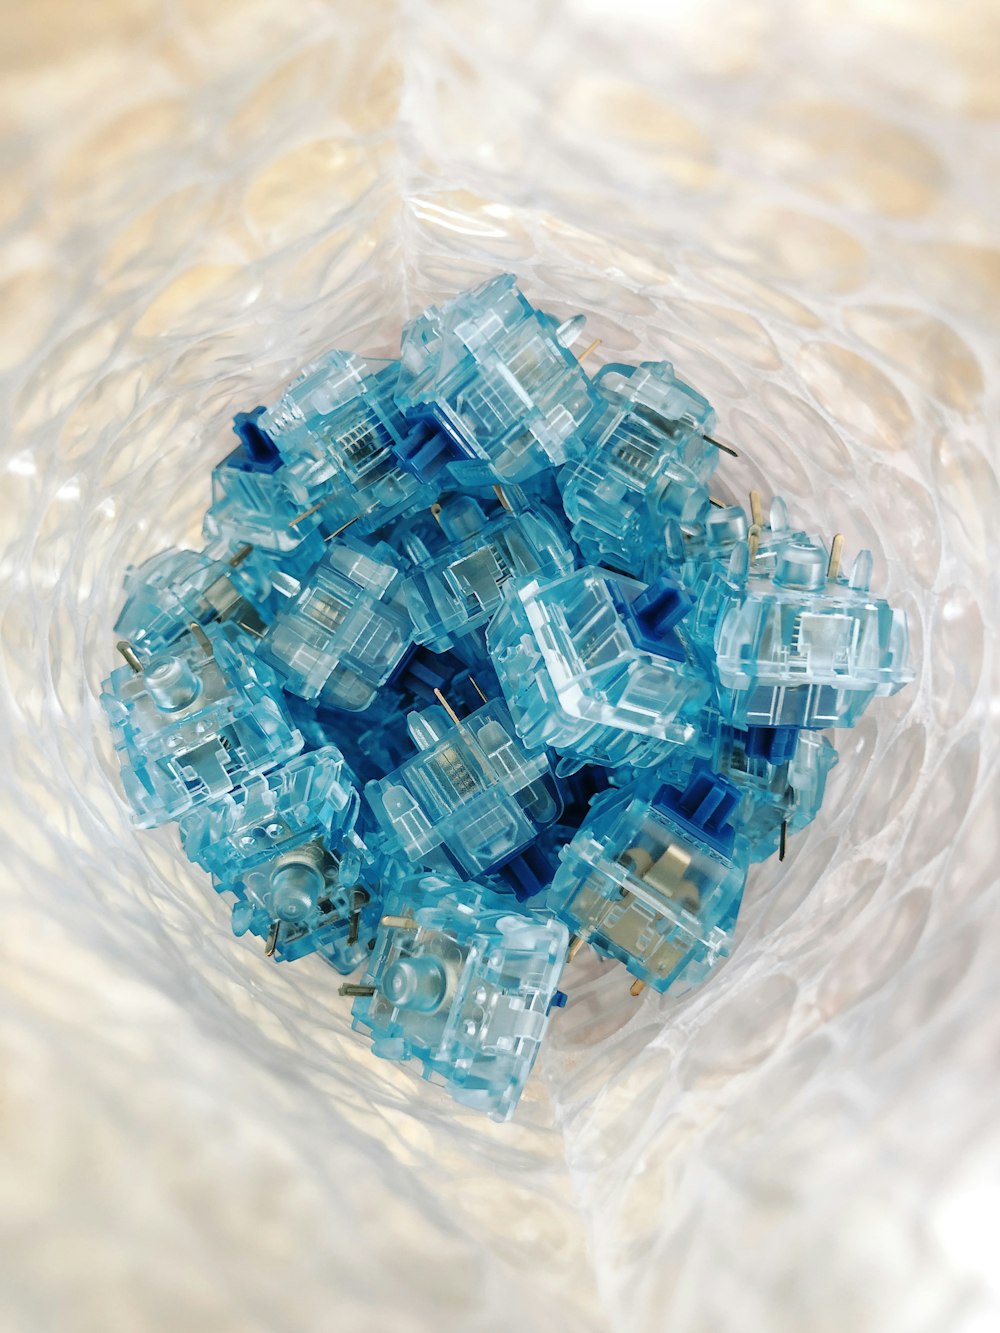 blocos de brinquedo de plástico azul e branco na água